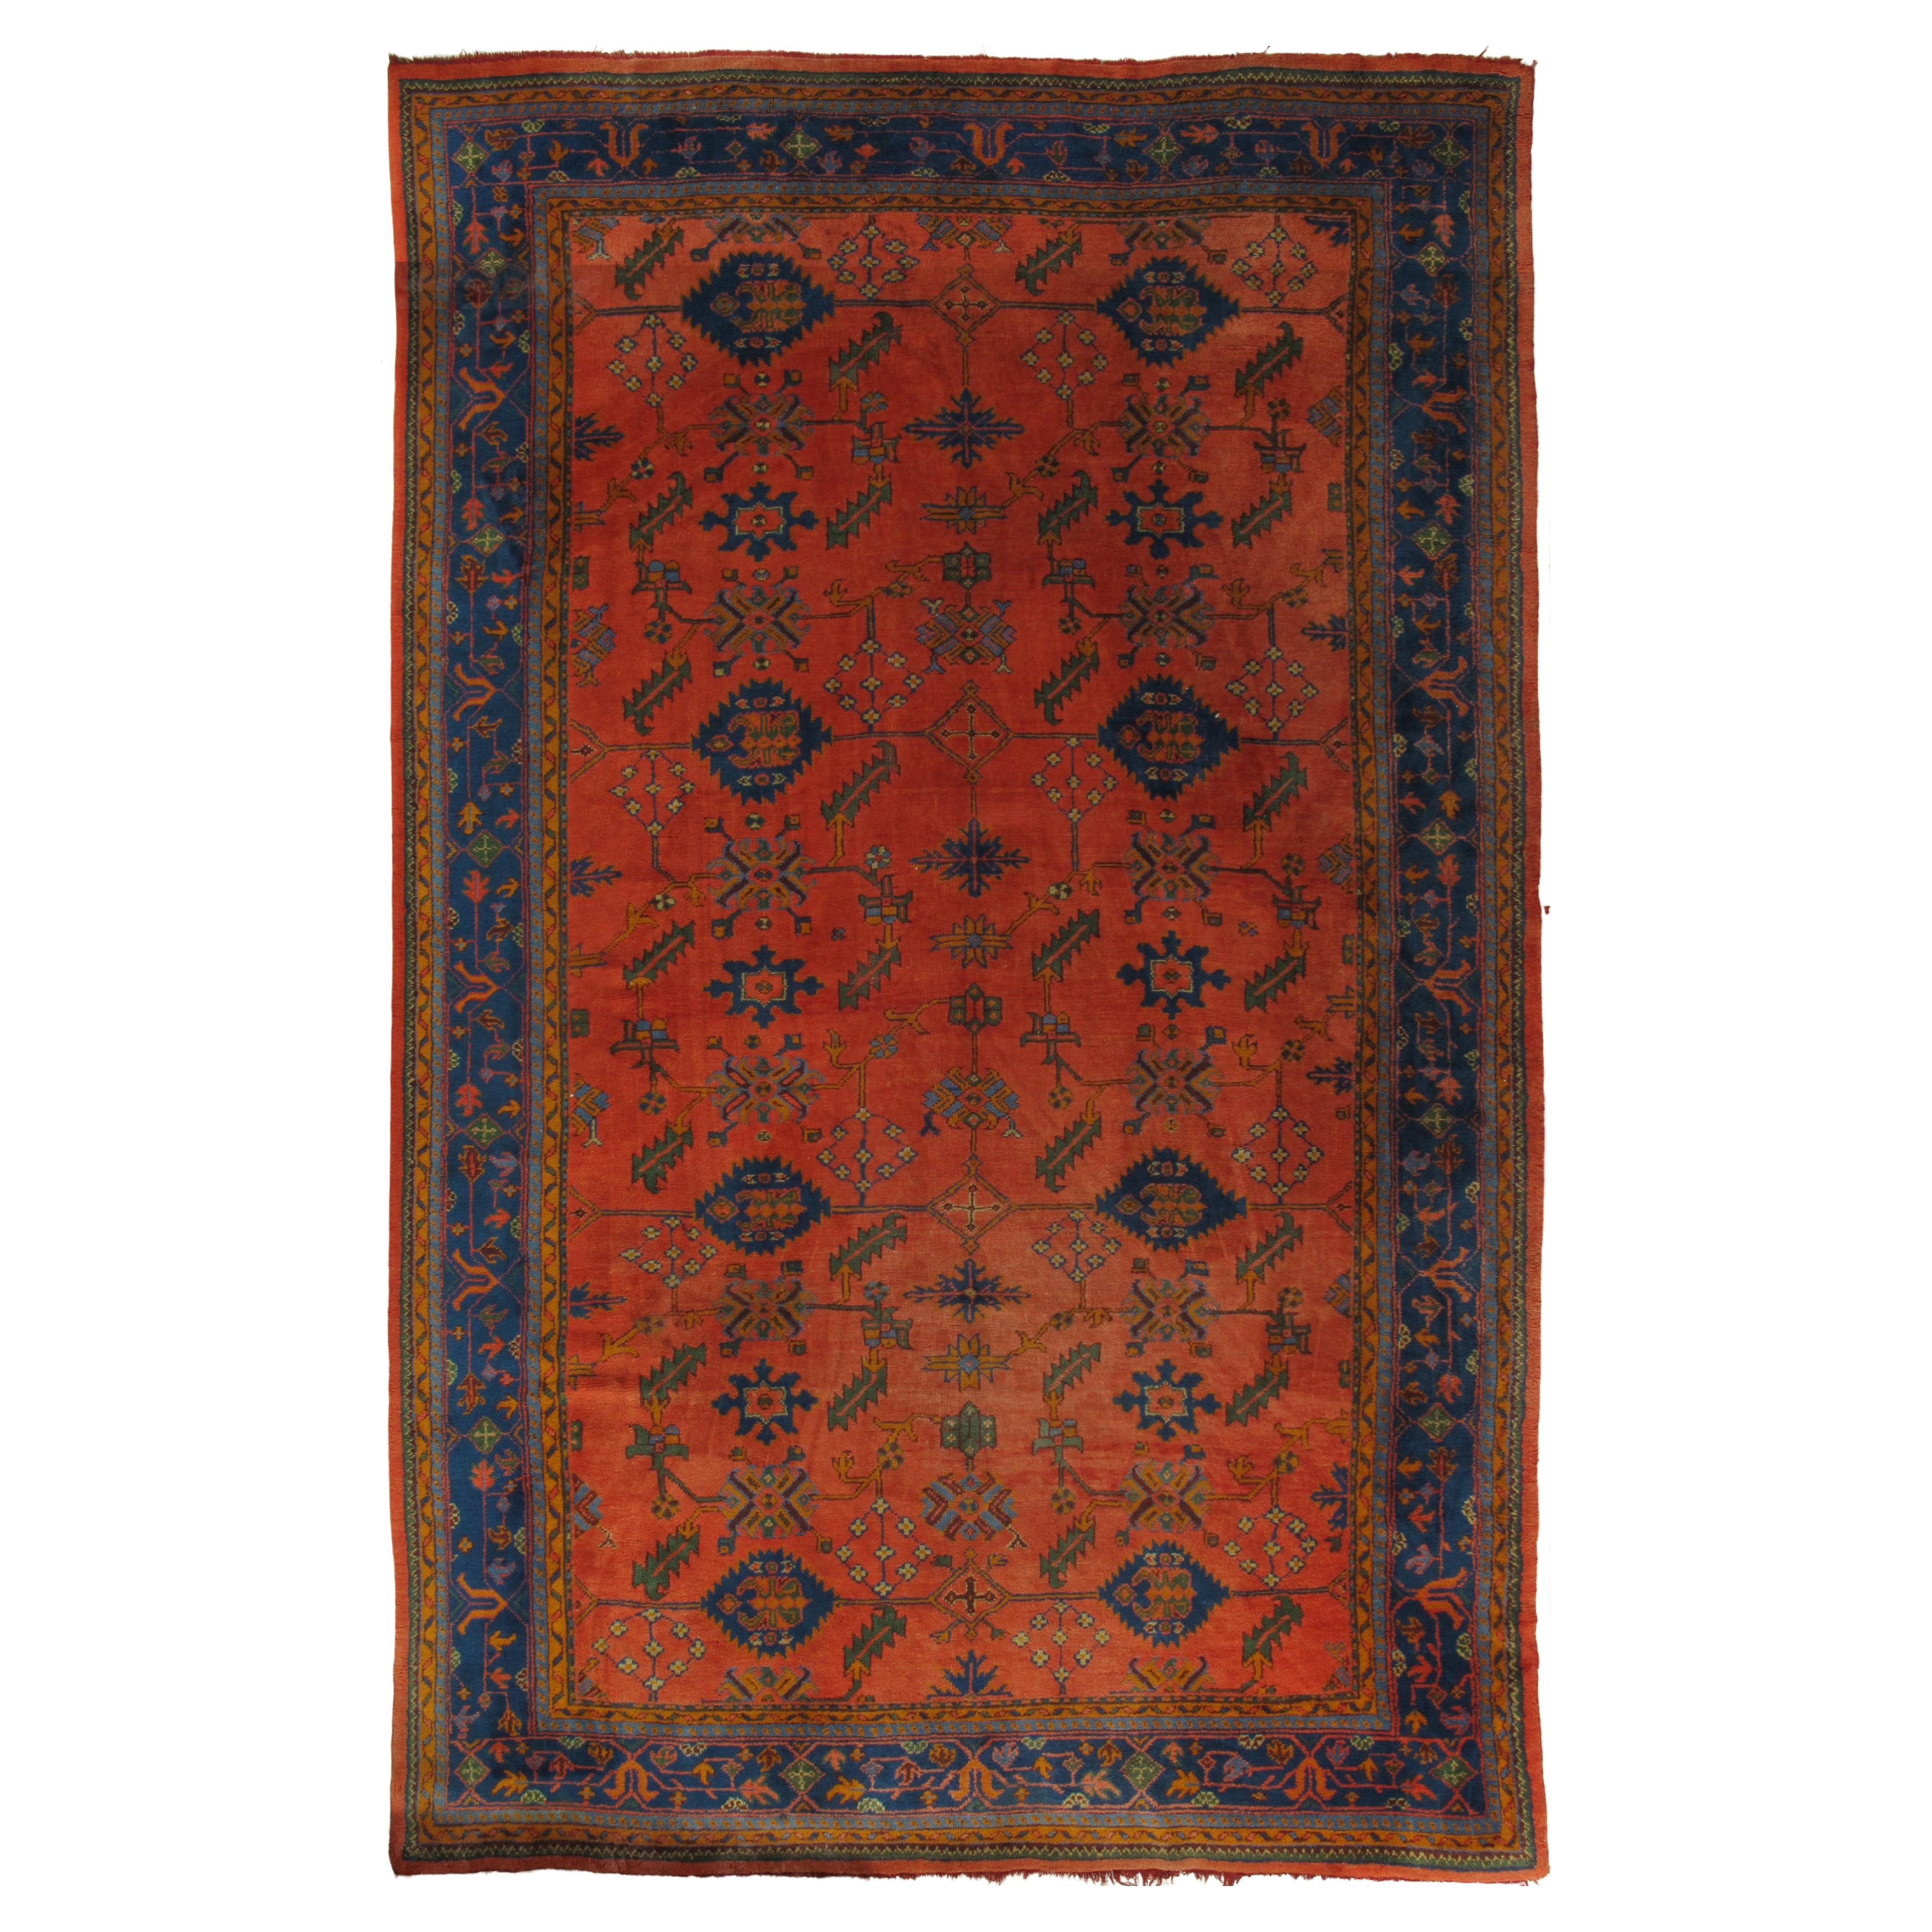 Antique Oushak Carpet, Oriental Rug, Handmade Rug Saffron, Royal Blue and Coral